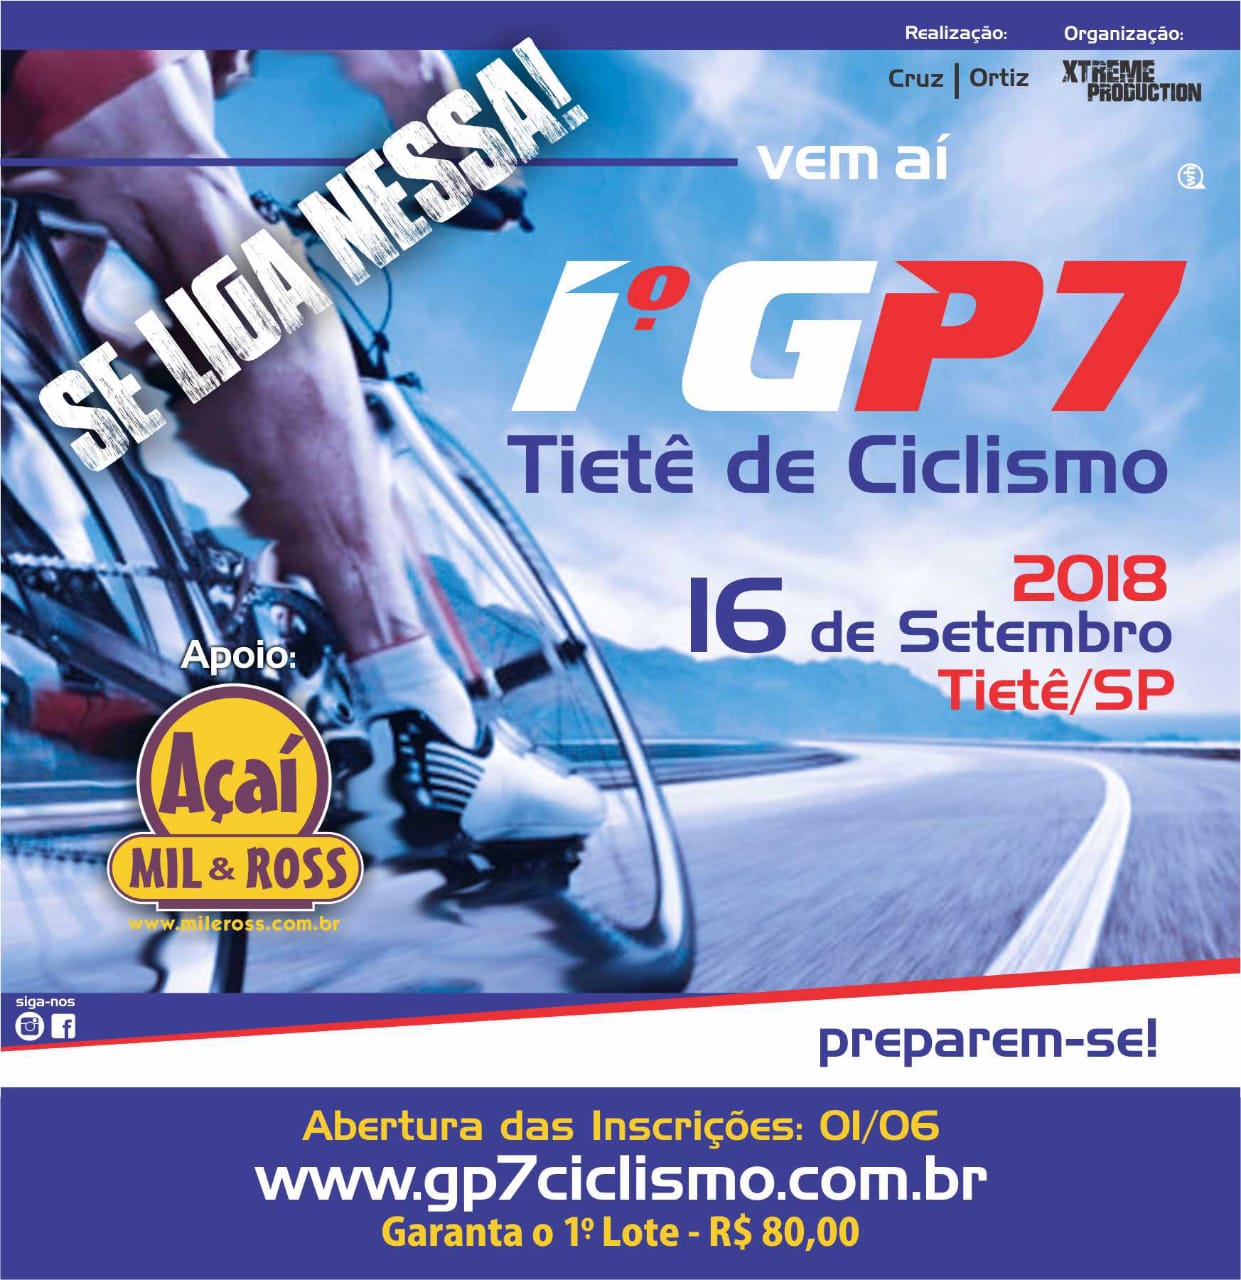 1ºGP7 Tietê de Ciclismo